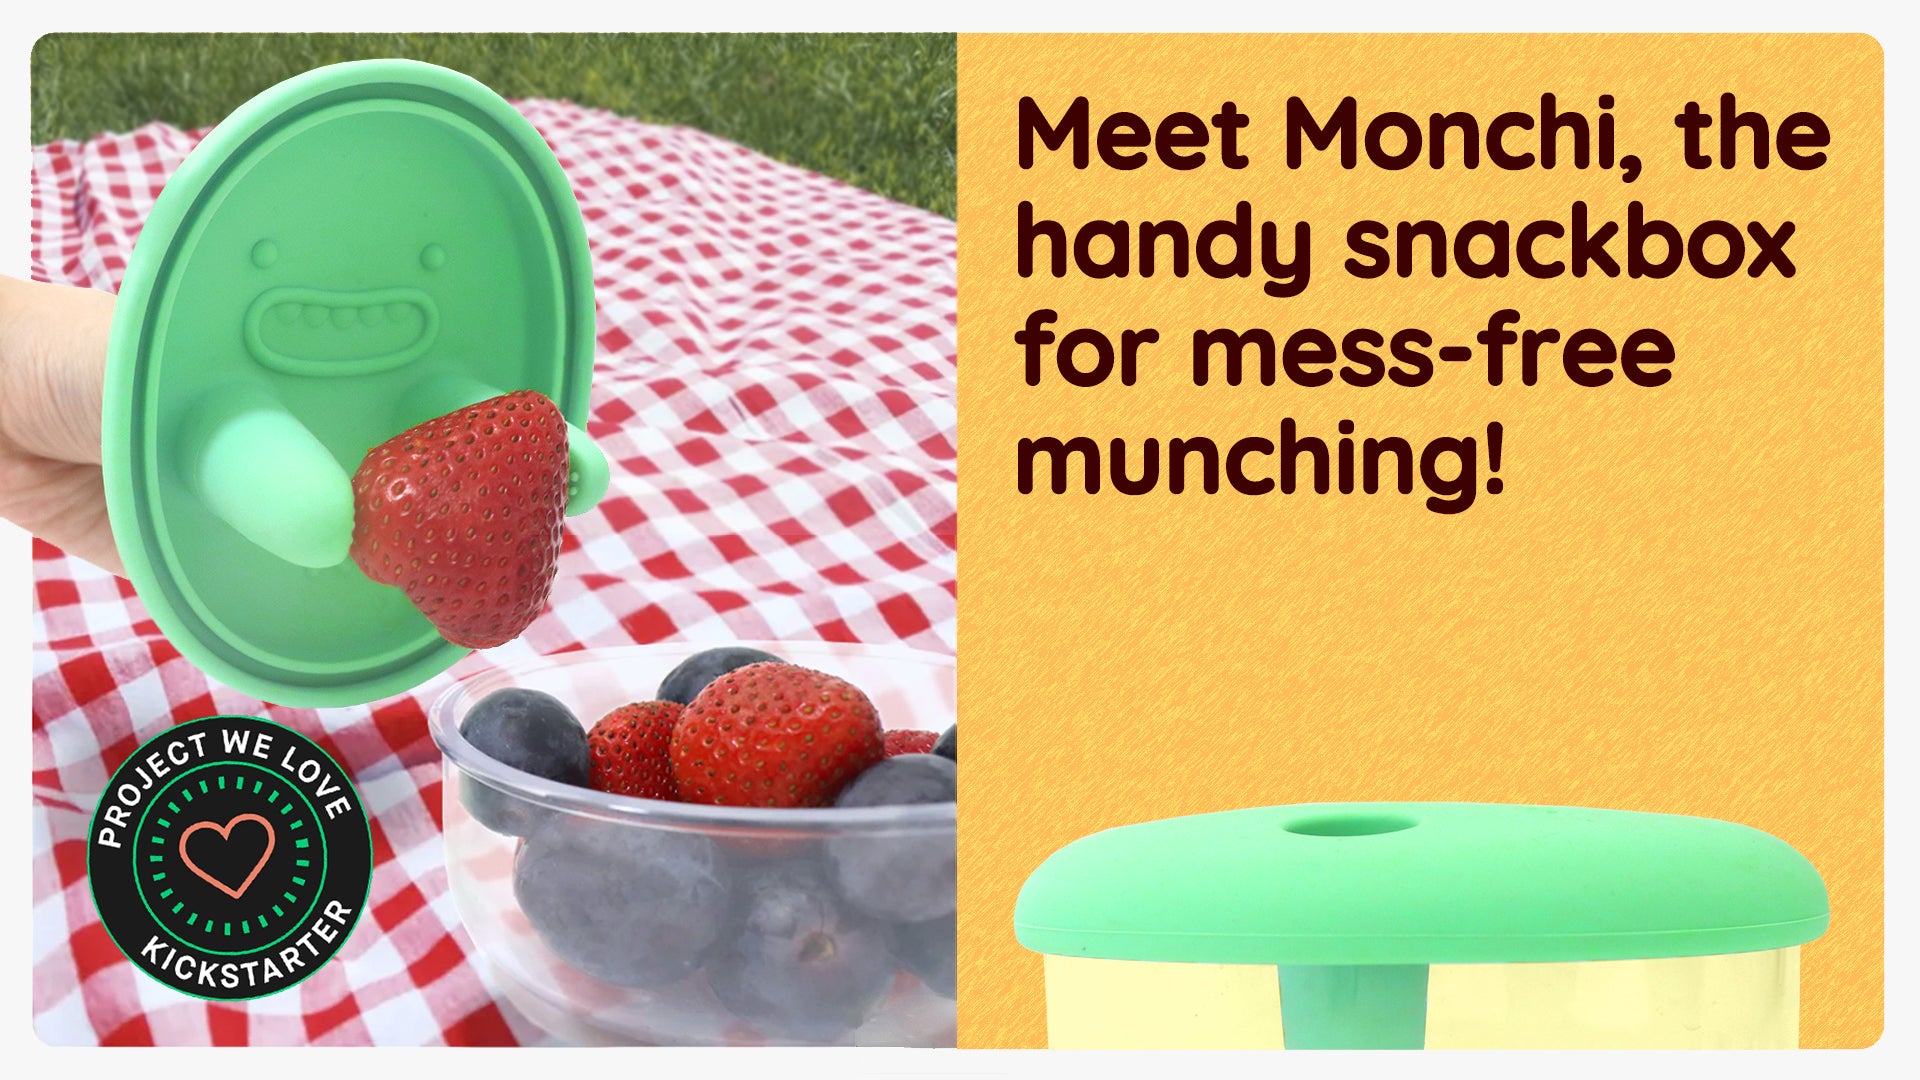 Monchi: A handy snackbox for mess-free munching! by Monchi — Kickstarter